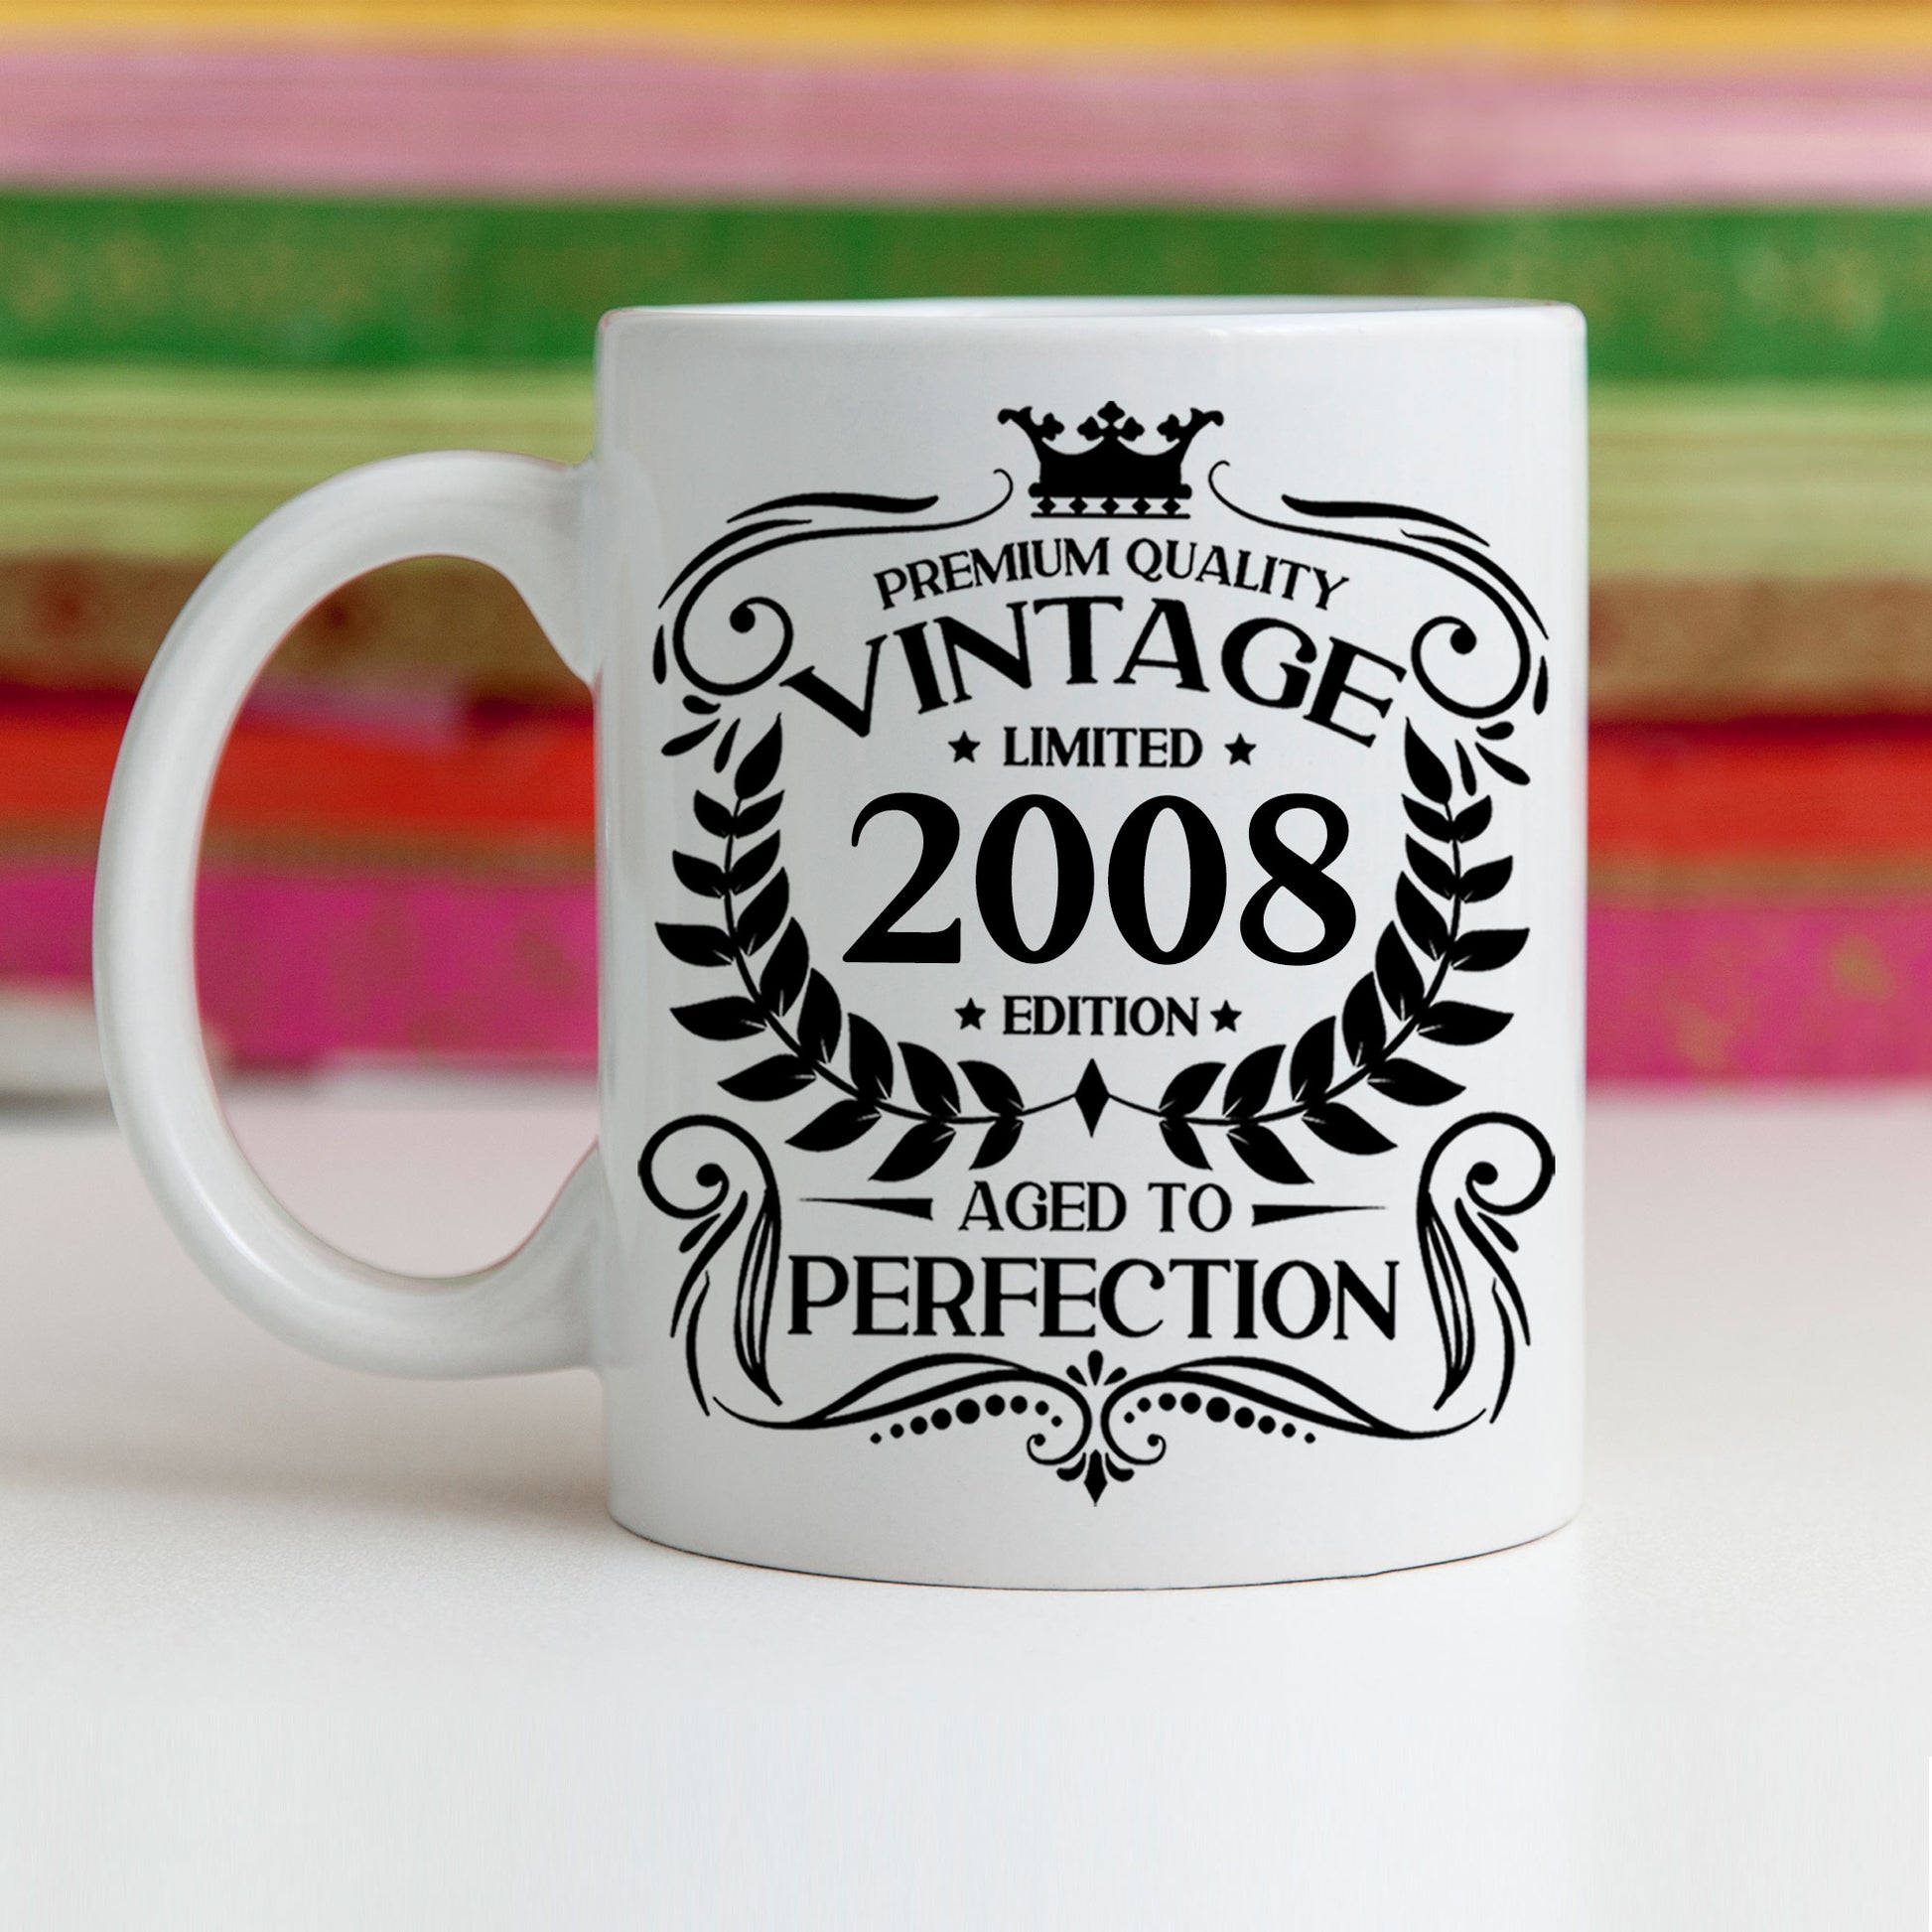 Personalised Vintage 2008 Mug and/or Coaster  - Always Looking Good - Mug On Its Own  